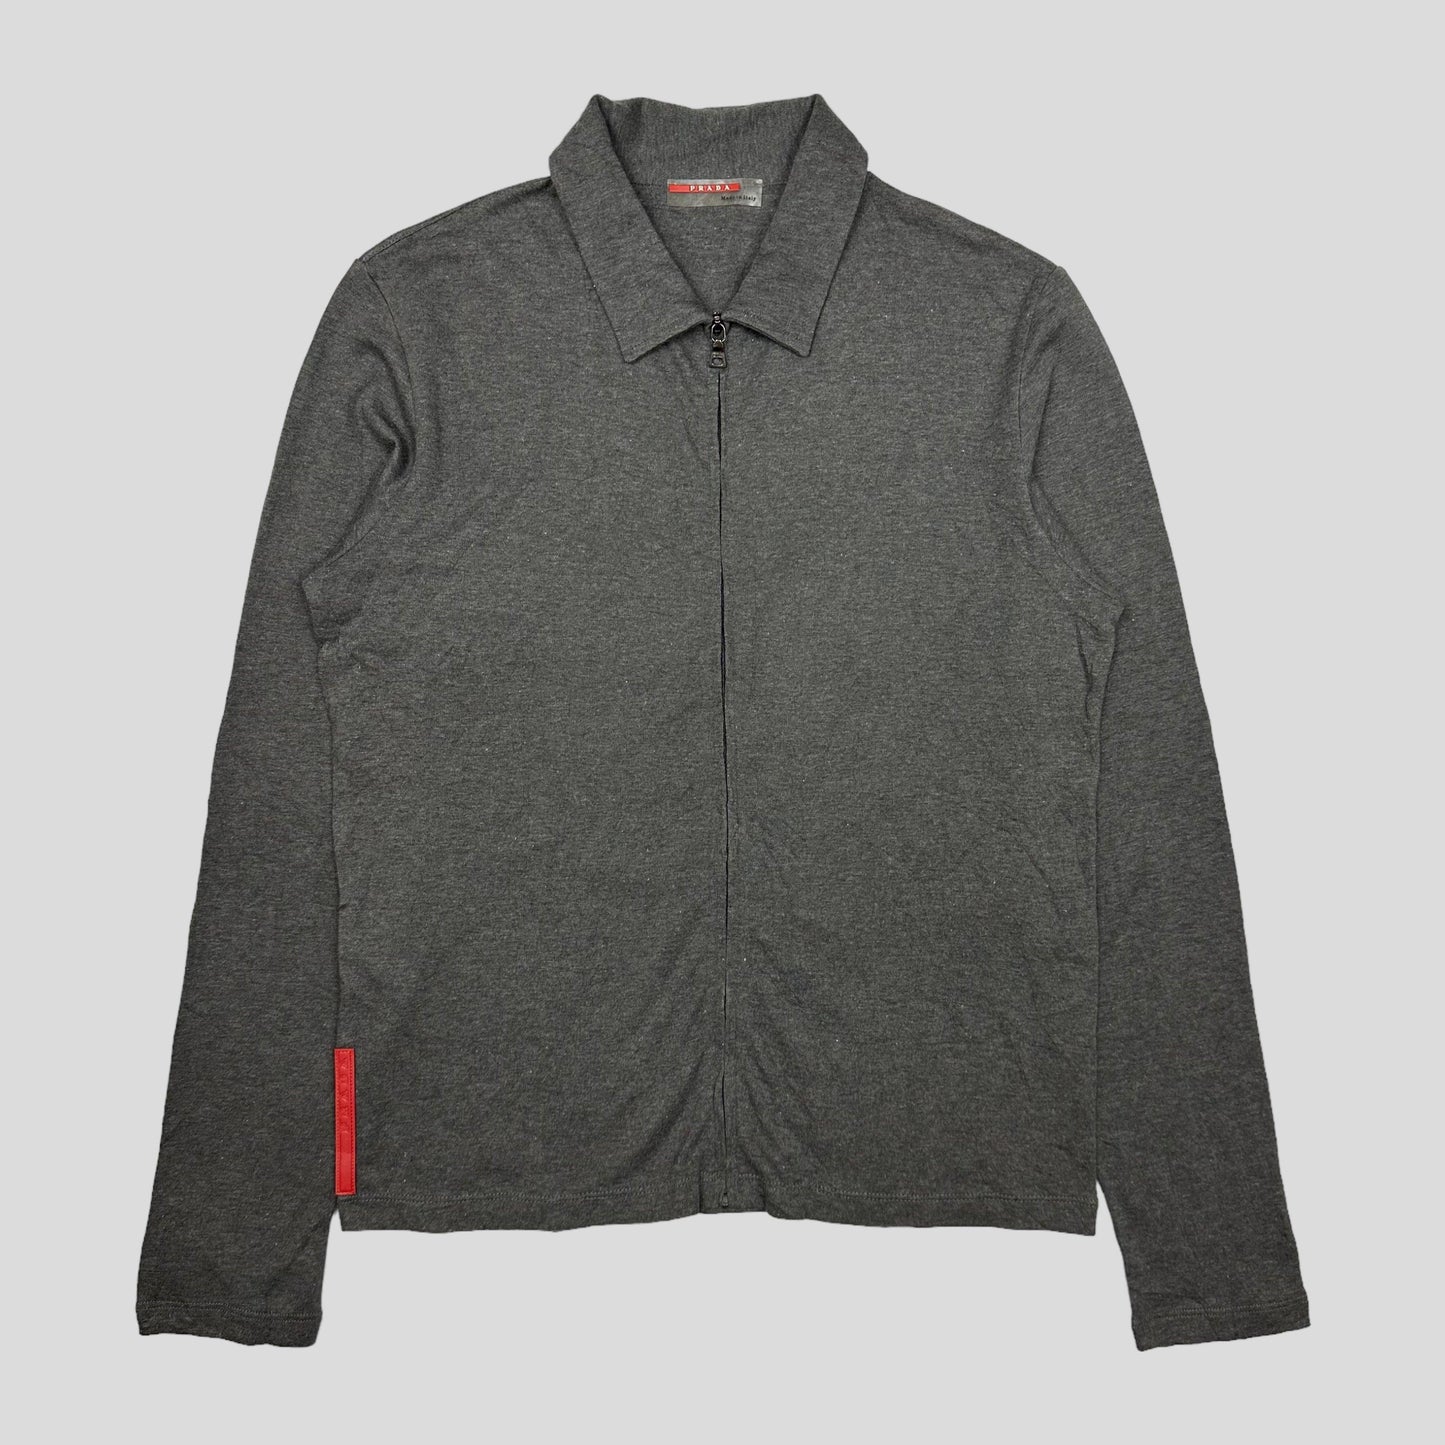 Prada Sport SS99 Grey Zip Shirt - 8 - Known Source